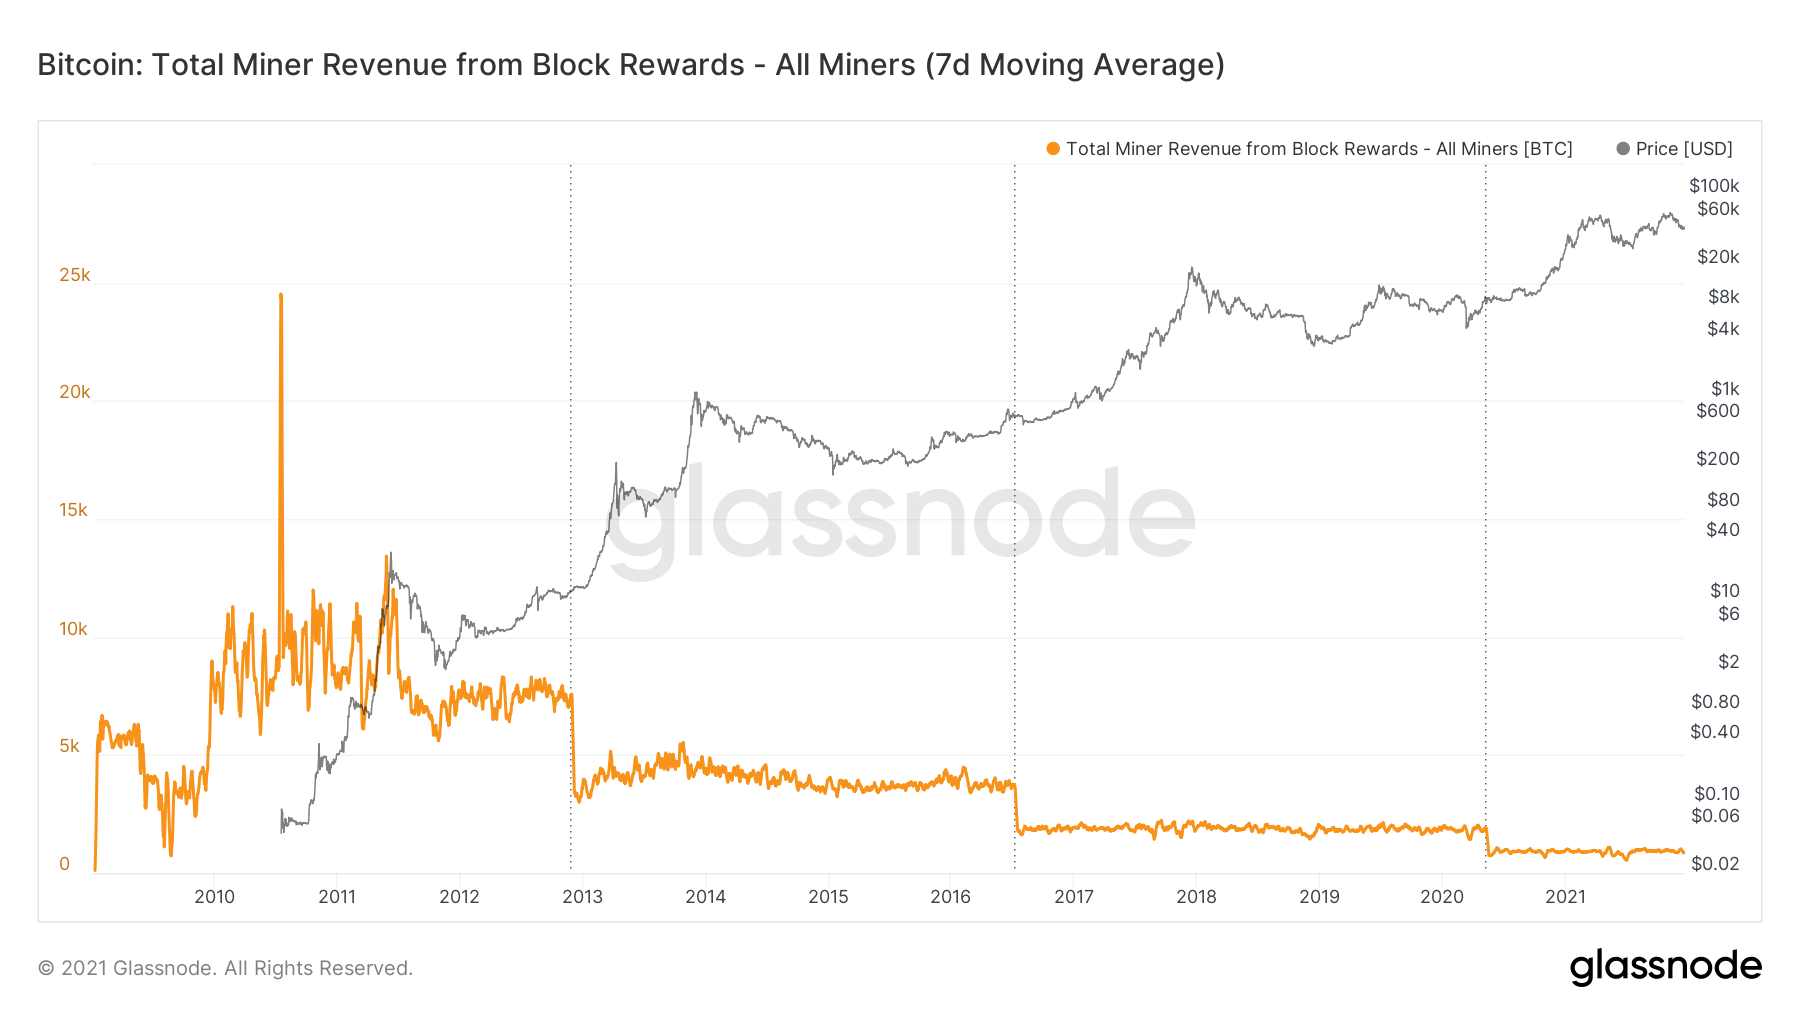 Bitcoin Miner Revenue from Block Rewards in BTC